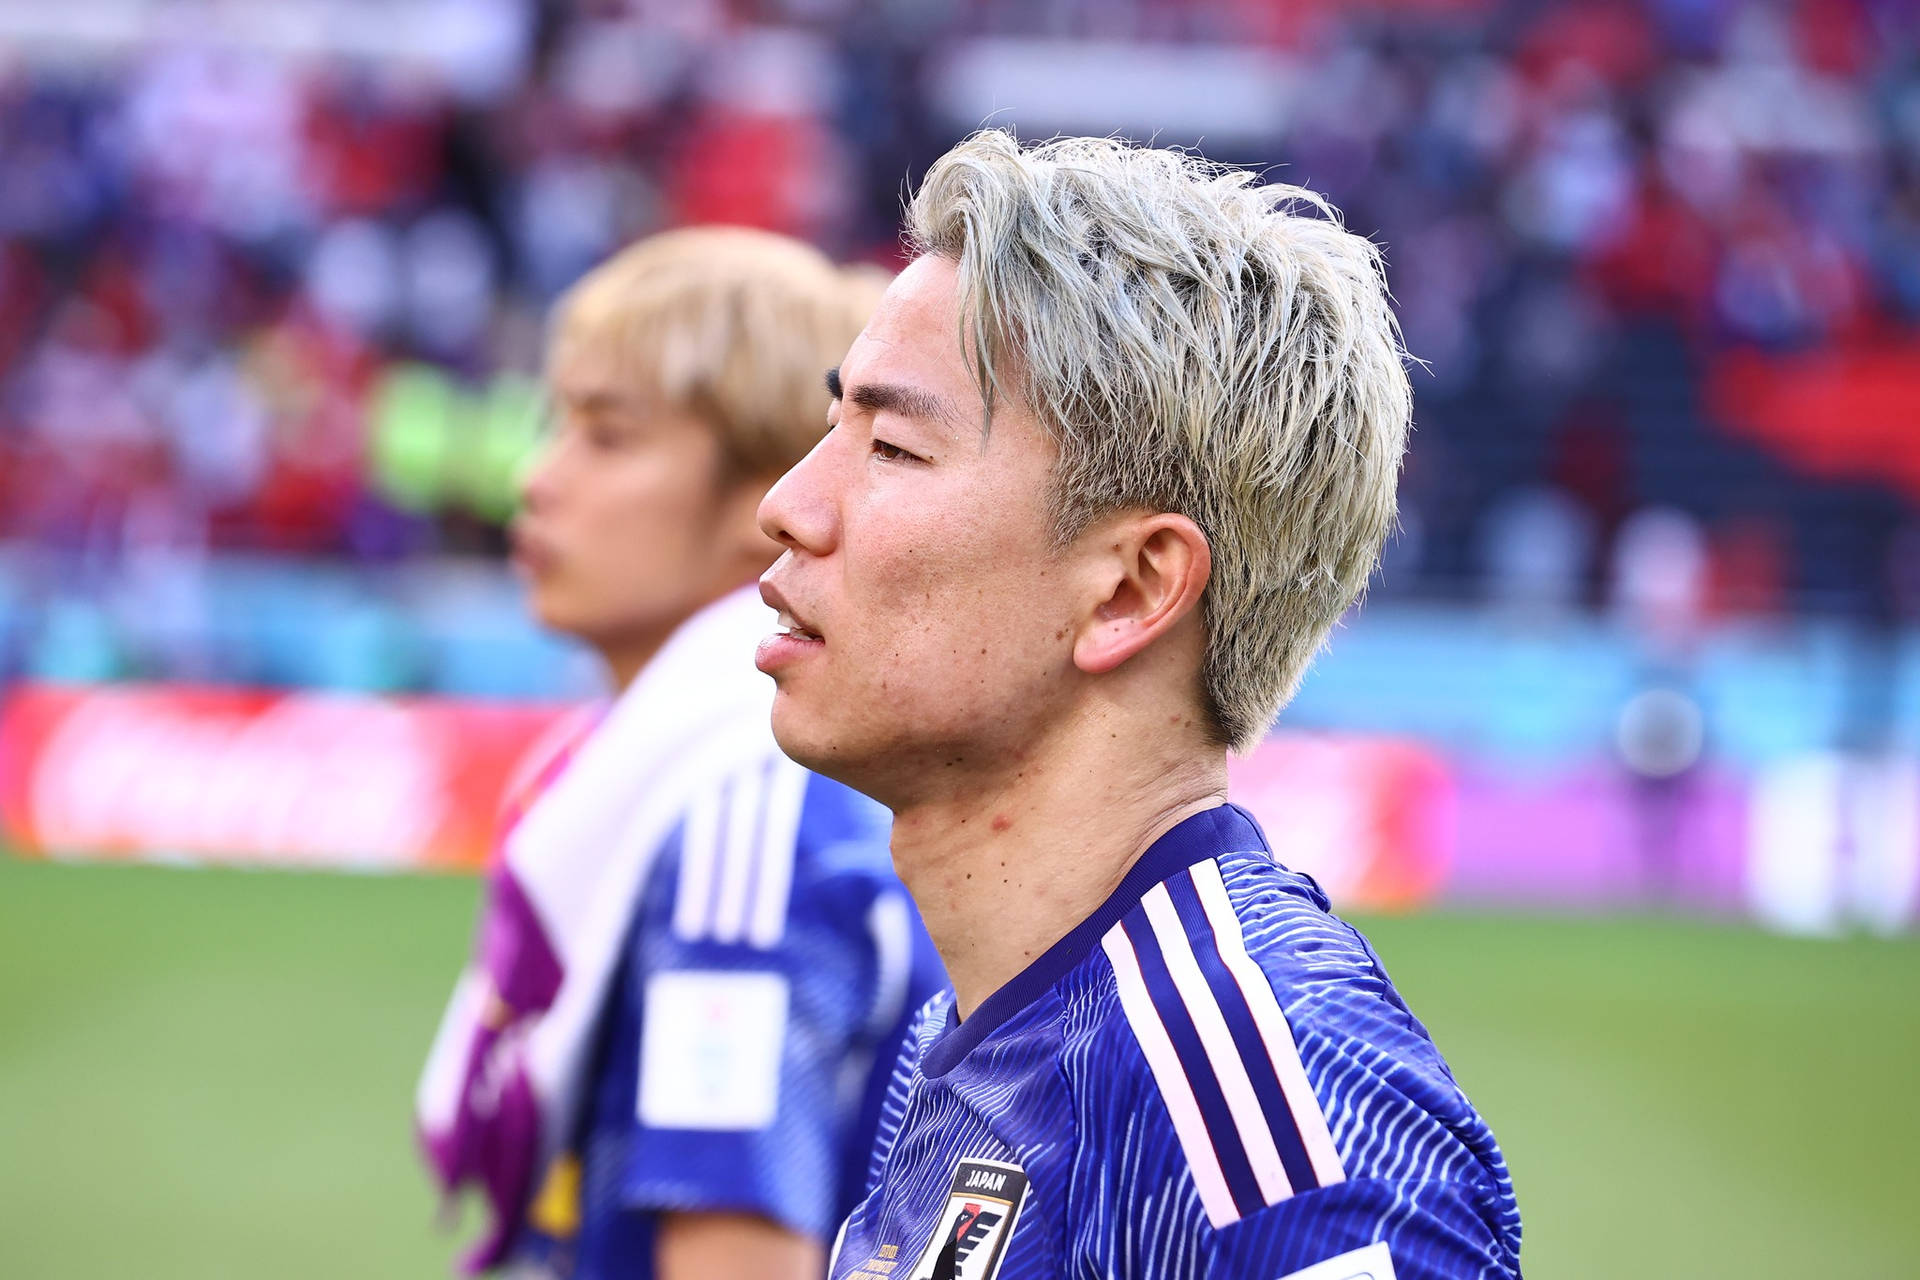 Download Serious Japan National Football Team Player Asano Wallpaper |  